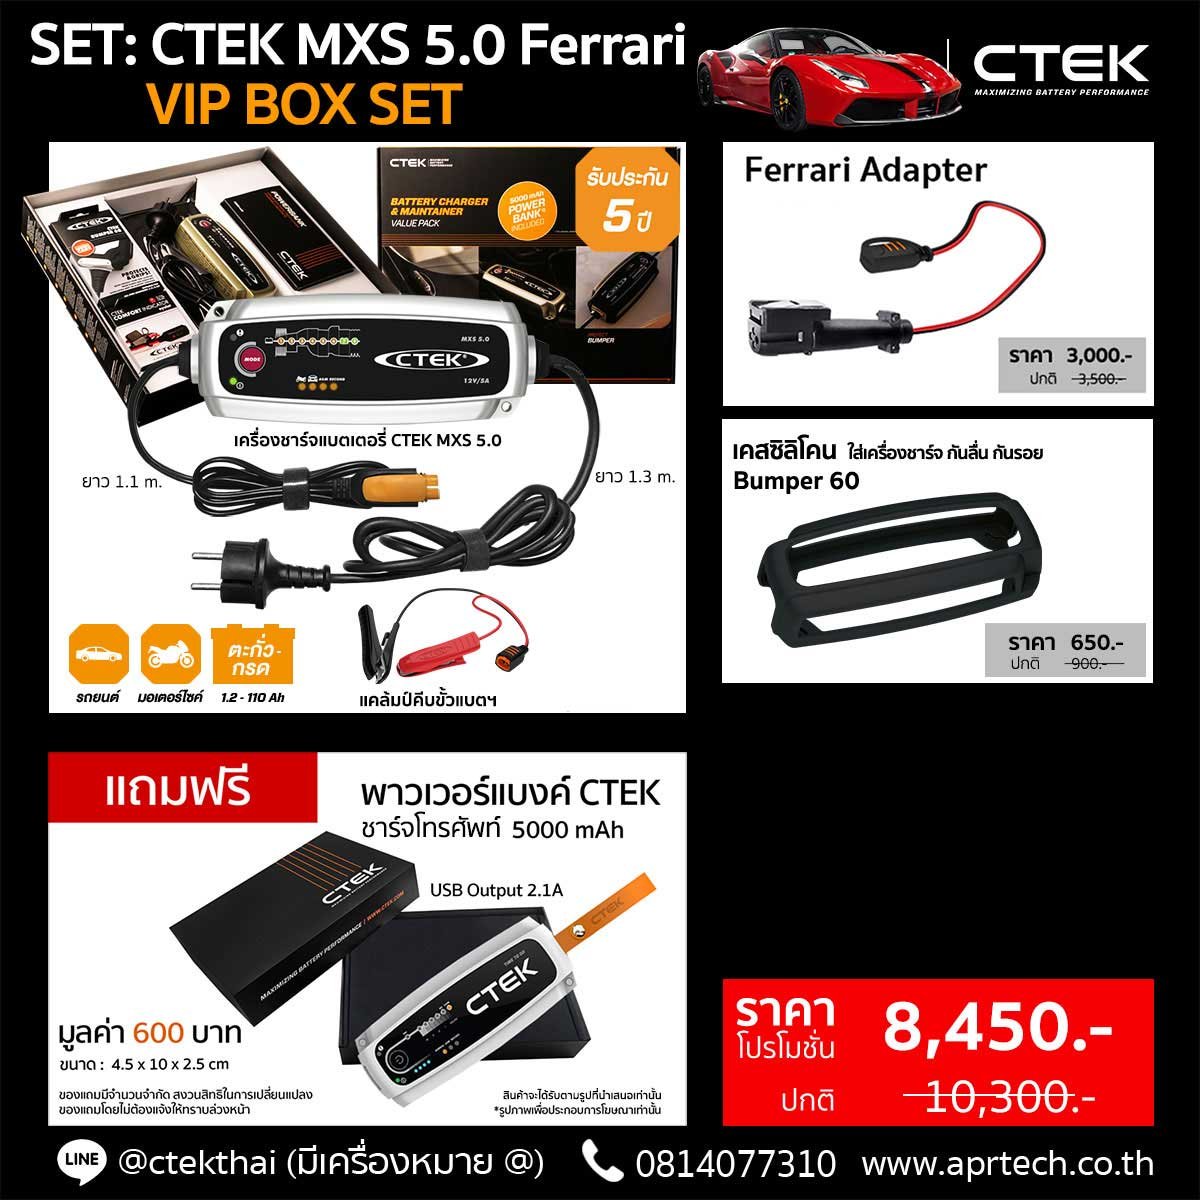 SET MXS 5.0 Ferrari Adapter VIP READY BOX SET (MXS 5.0 + Ferrari Adapter + Bumper)